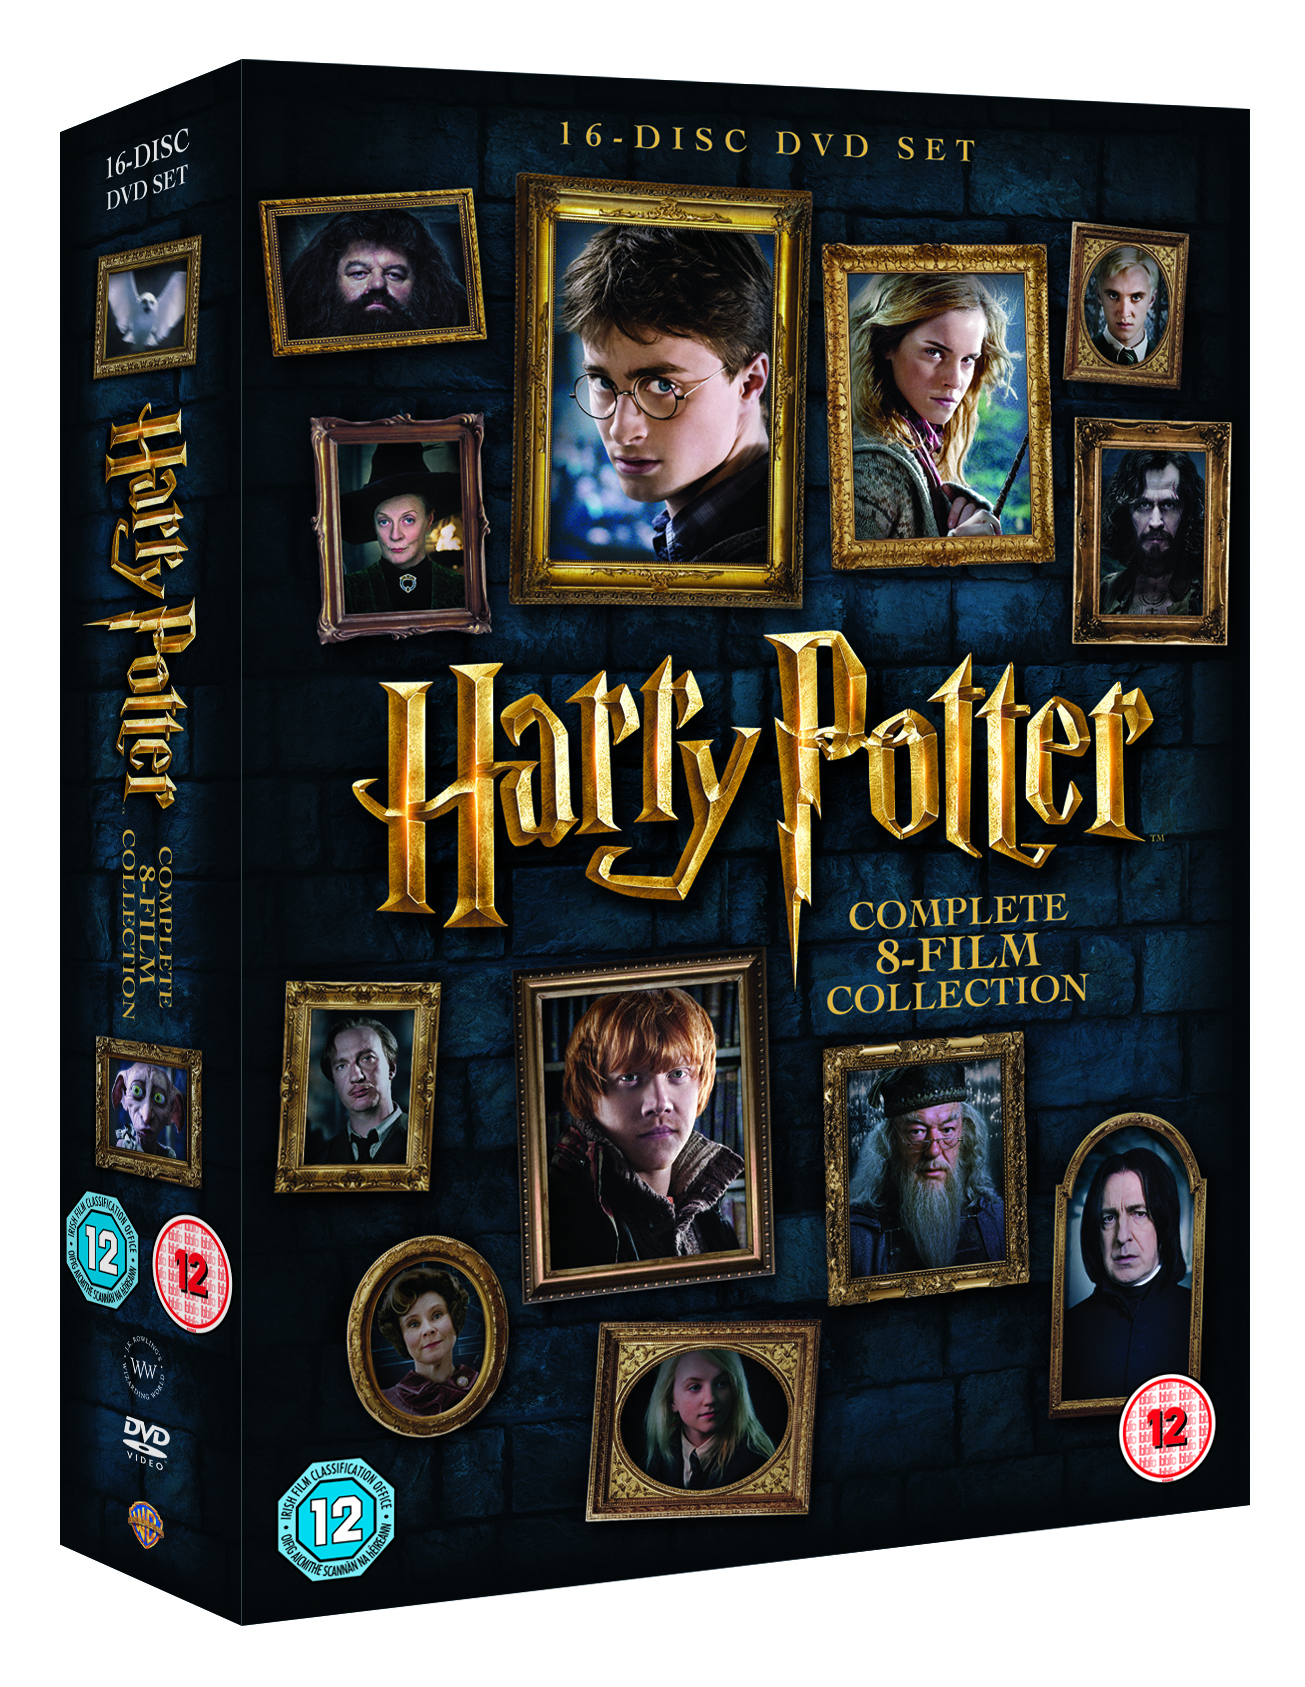 Metalen lijn Authenticatie tekort Win the Harry Potter film boxset on DVD or Blu-ray! - Entry @ Titan Books